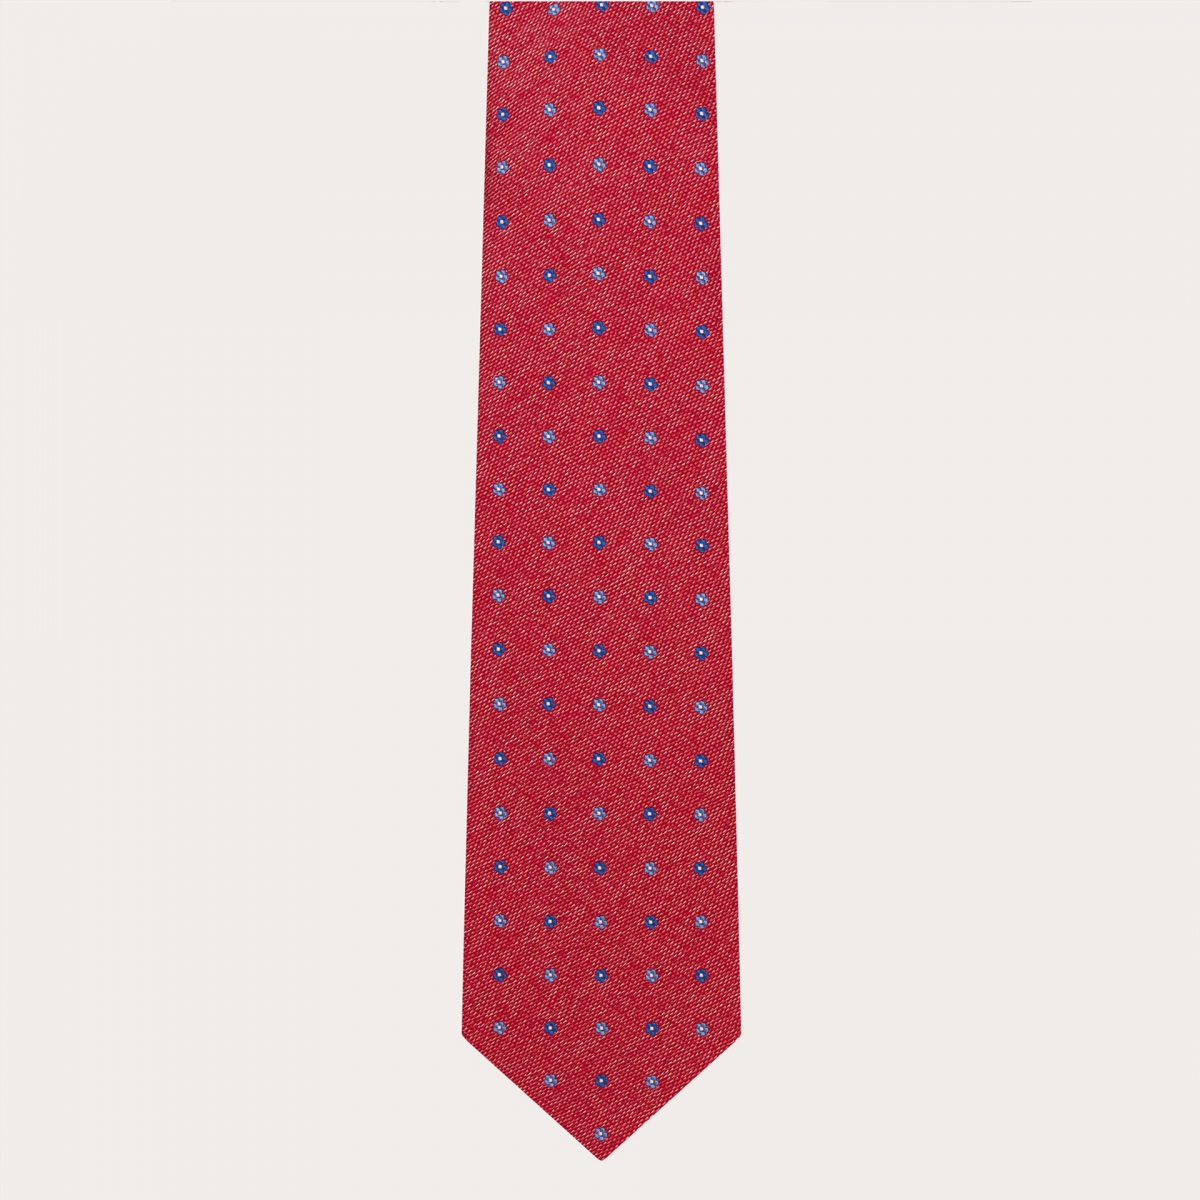 Cravatta in seta jacquard italiana, rossa con fantasia floreale